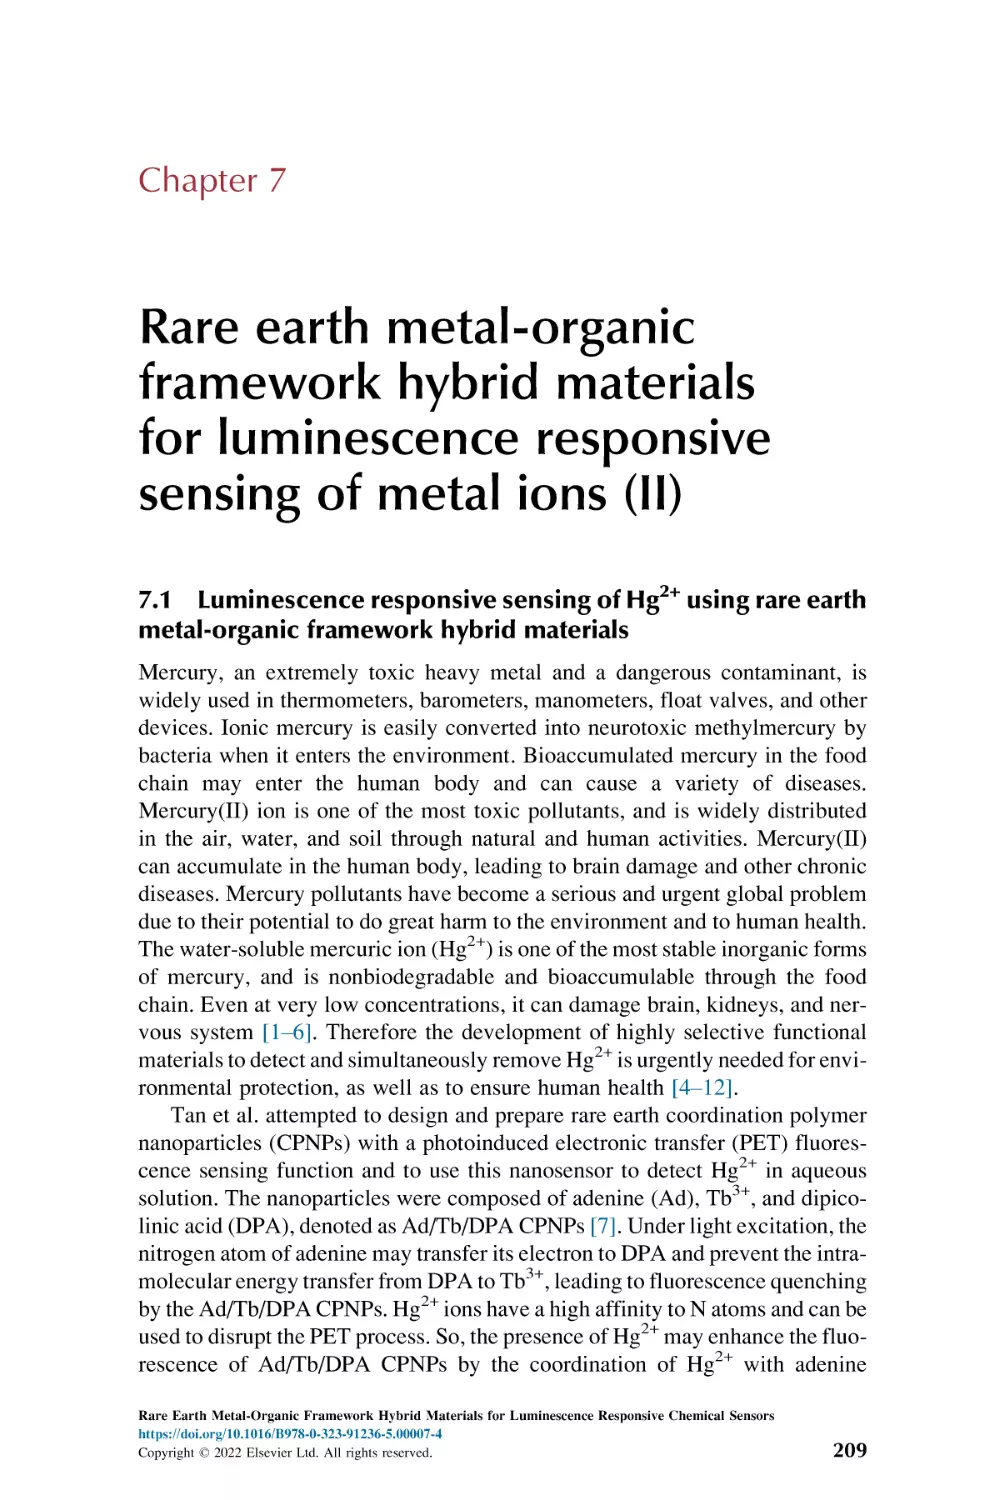 Chapter 7
7.1. Luminescence responsive sensing of Hg2+ using rare earth metal-organic framework hybrid materials